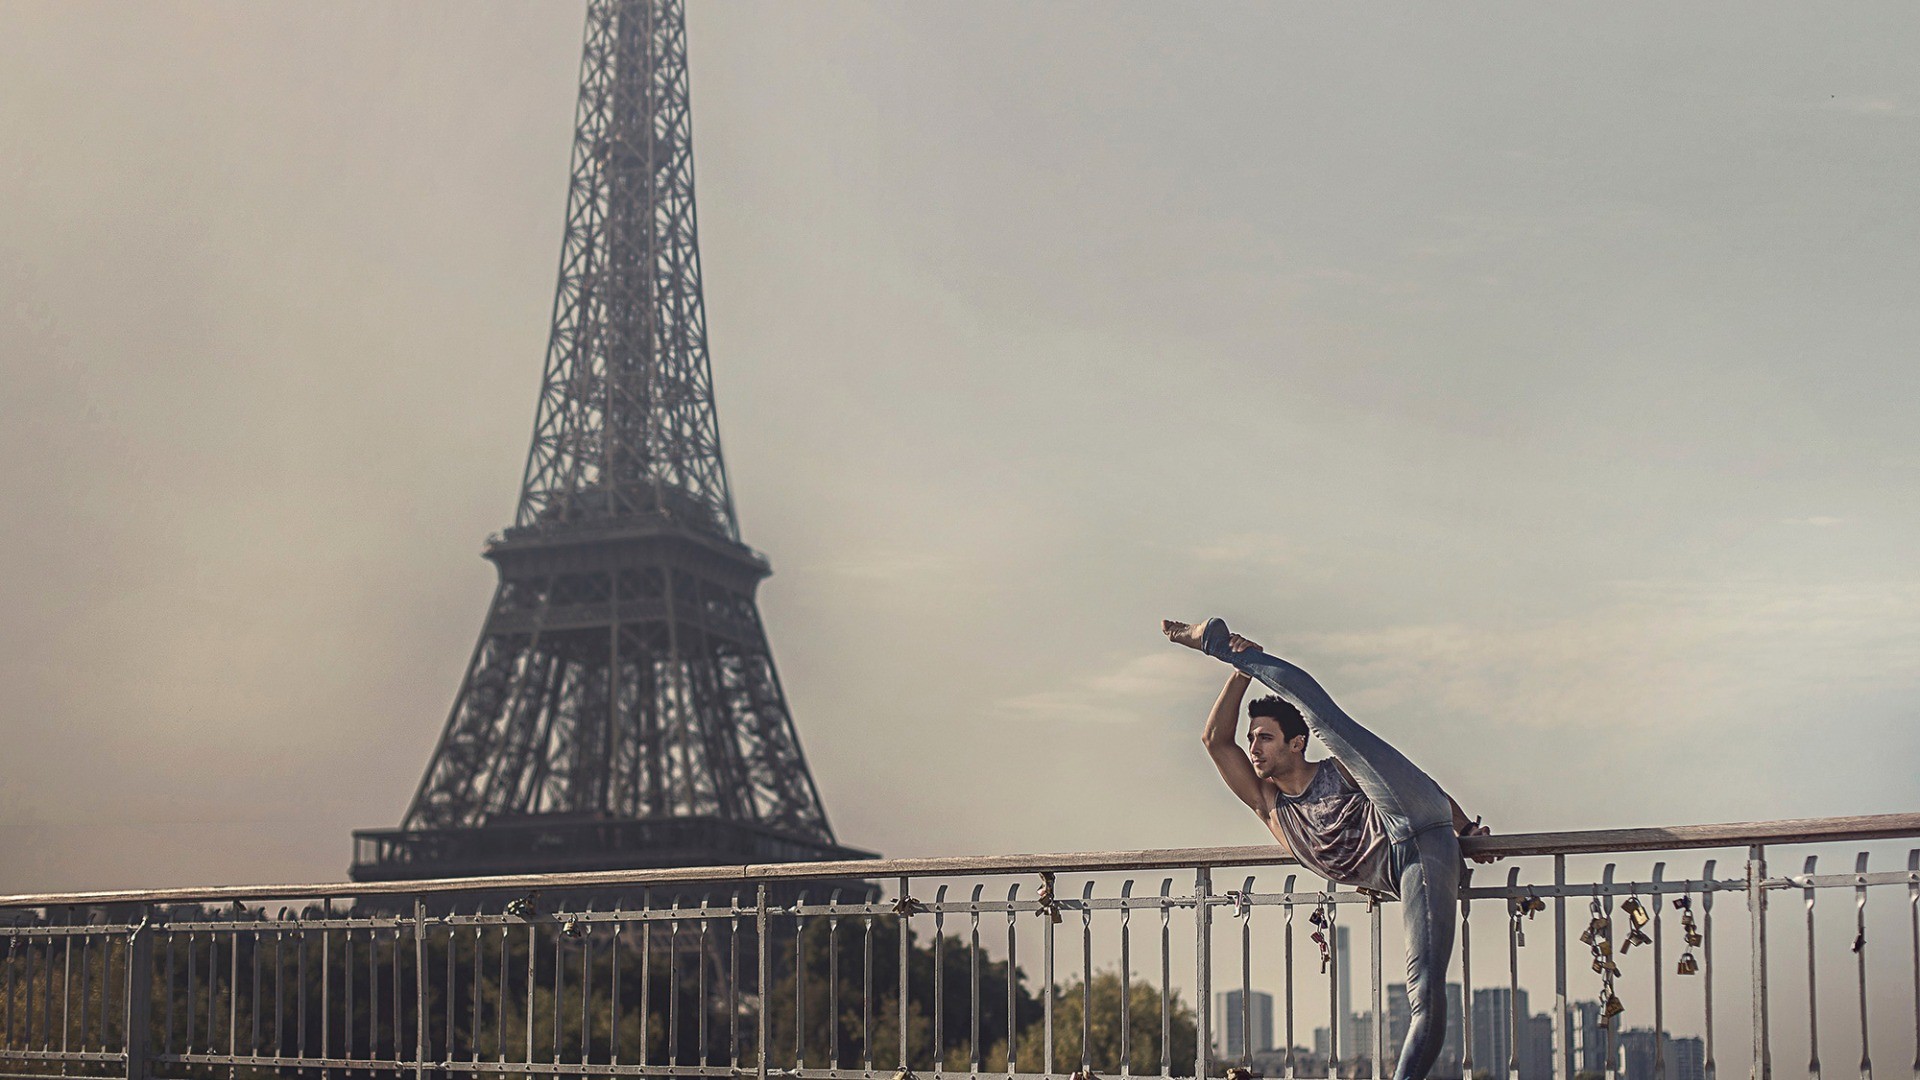 General 1920x1080 Paris Eiffel Tower gymnastics France men men outdoors spread legs flexible urban model dancer landmark Europe